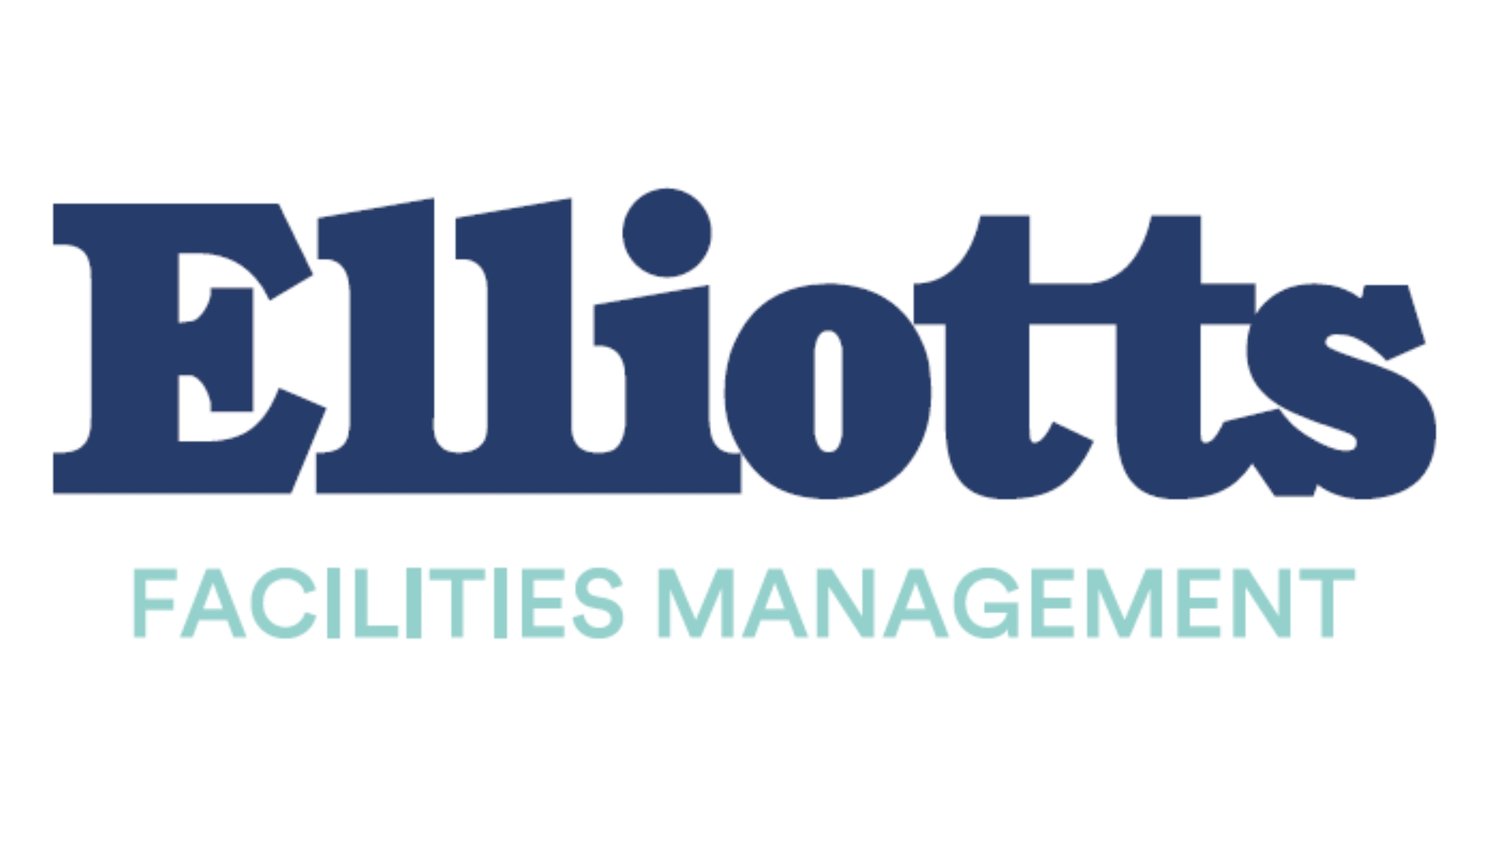 Elliotts Facilities Management